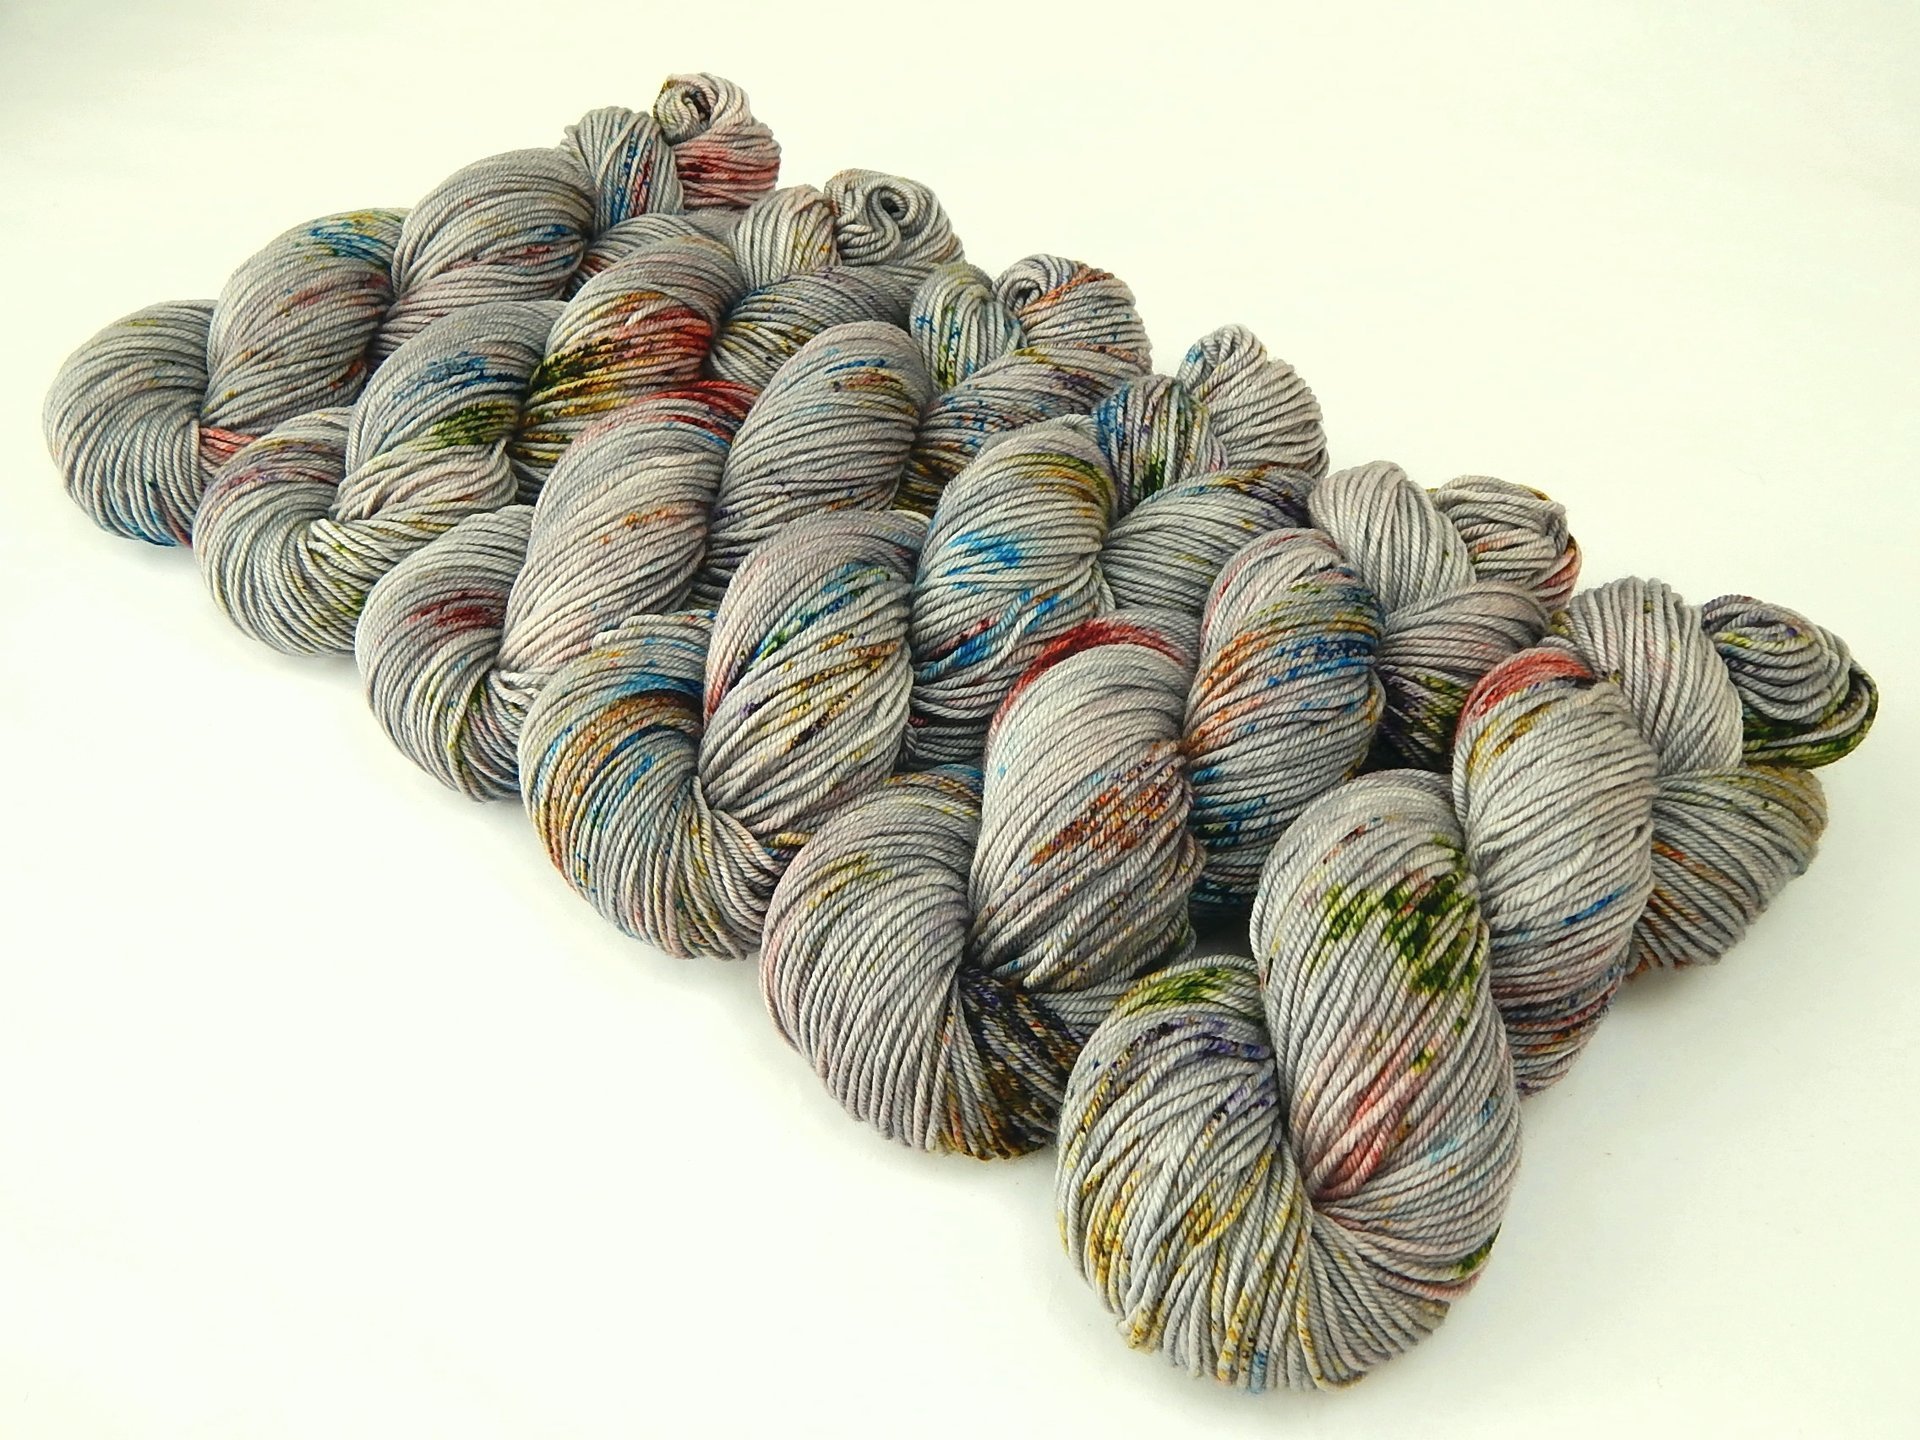 Hand Dyed Yarn, DK Weight Superwash Merino Wool - Potluck Graffiti - Grey with Speckles Indie Dyed Yarn, Gray Rainbow Speckled Knitting Yarn